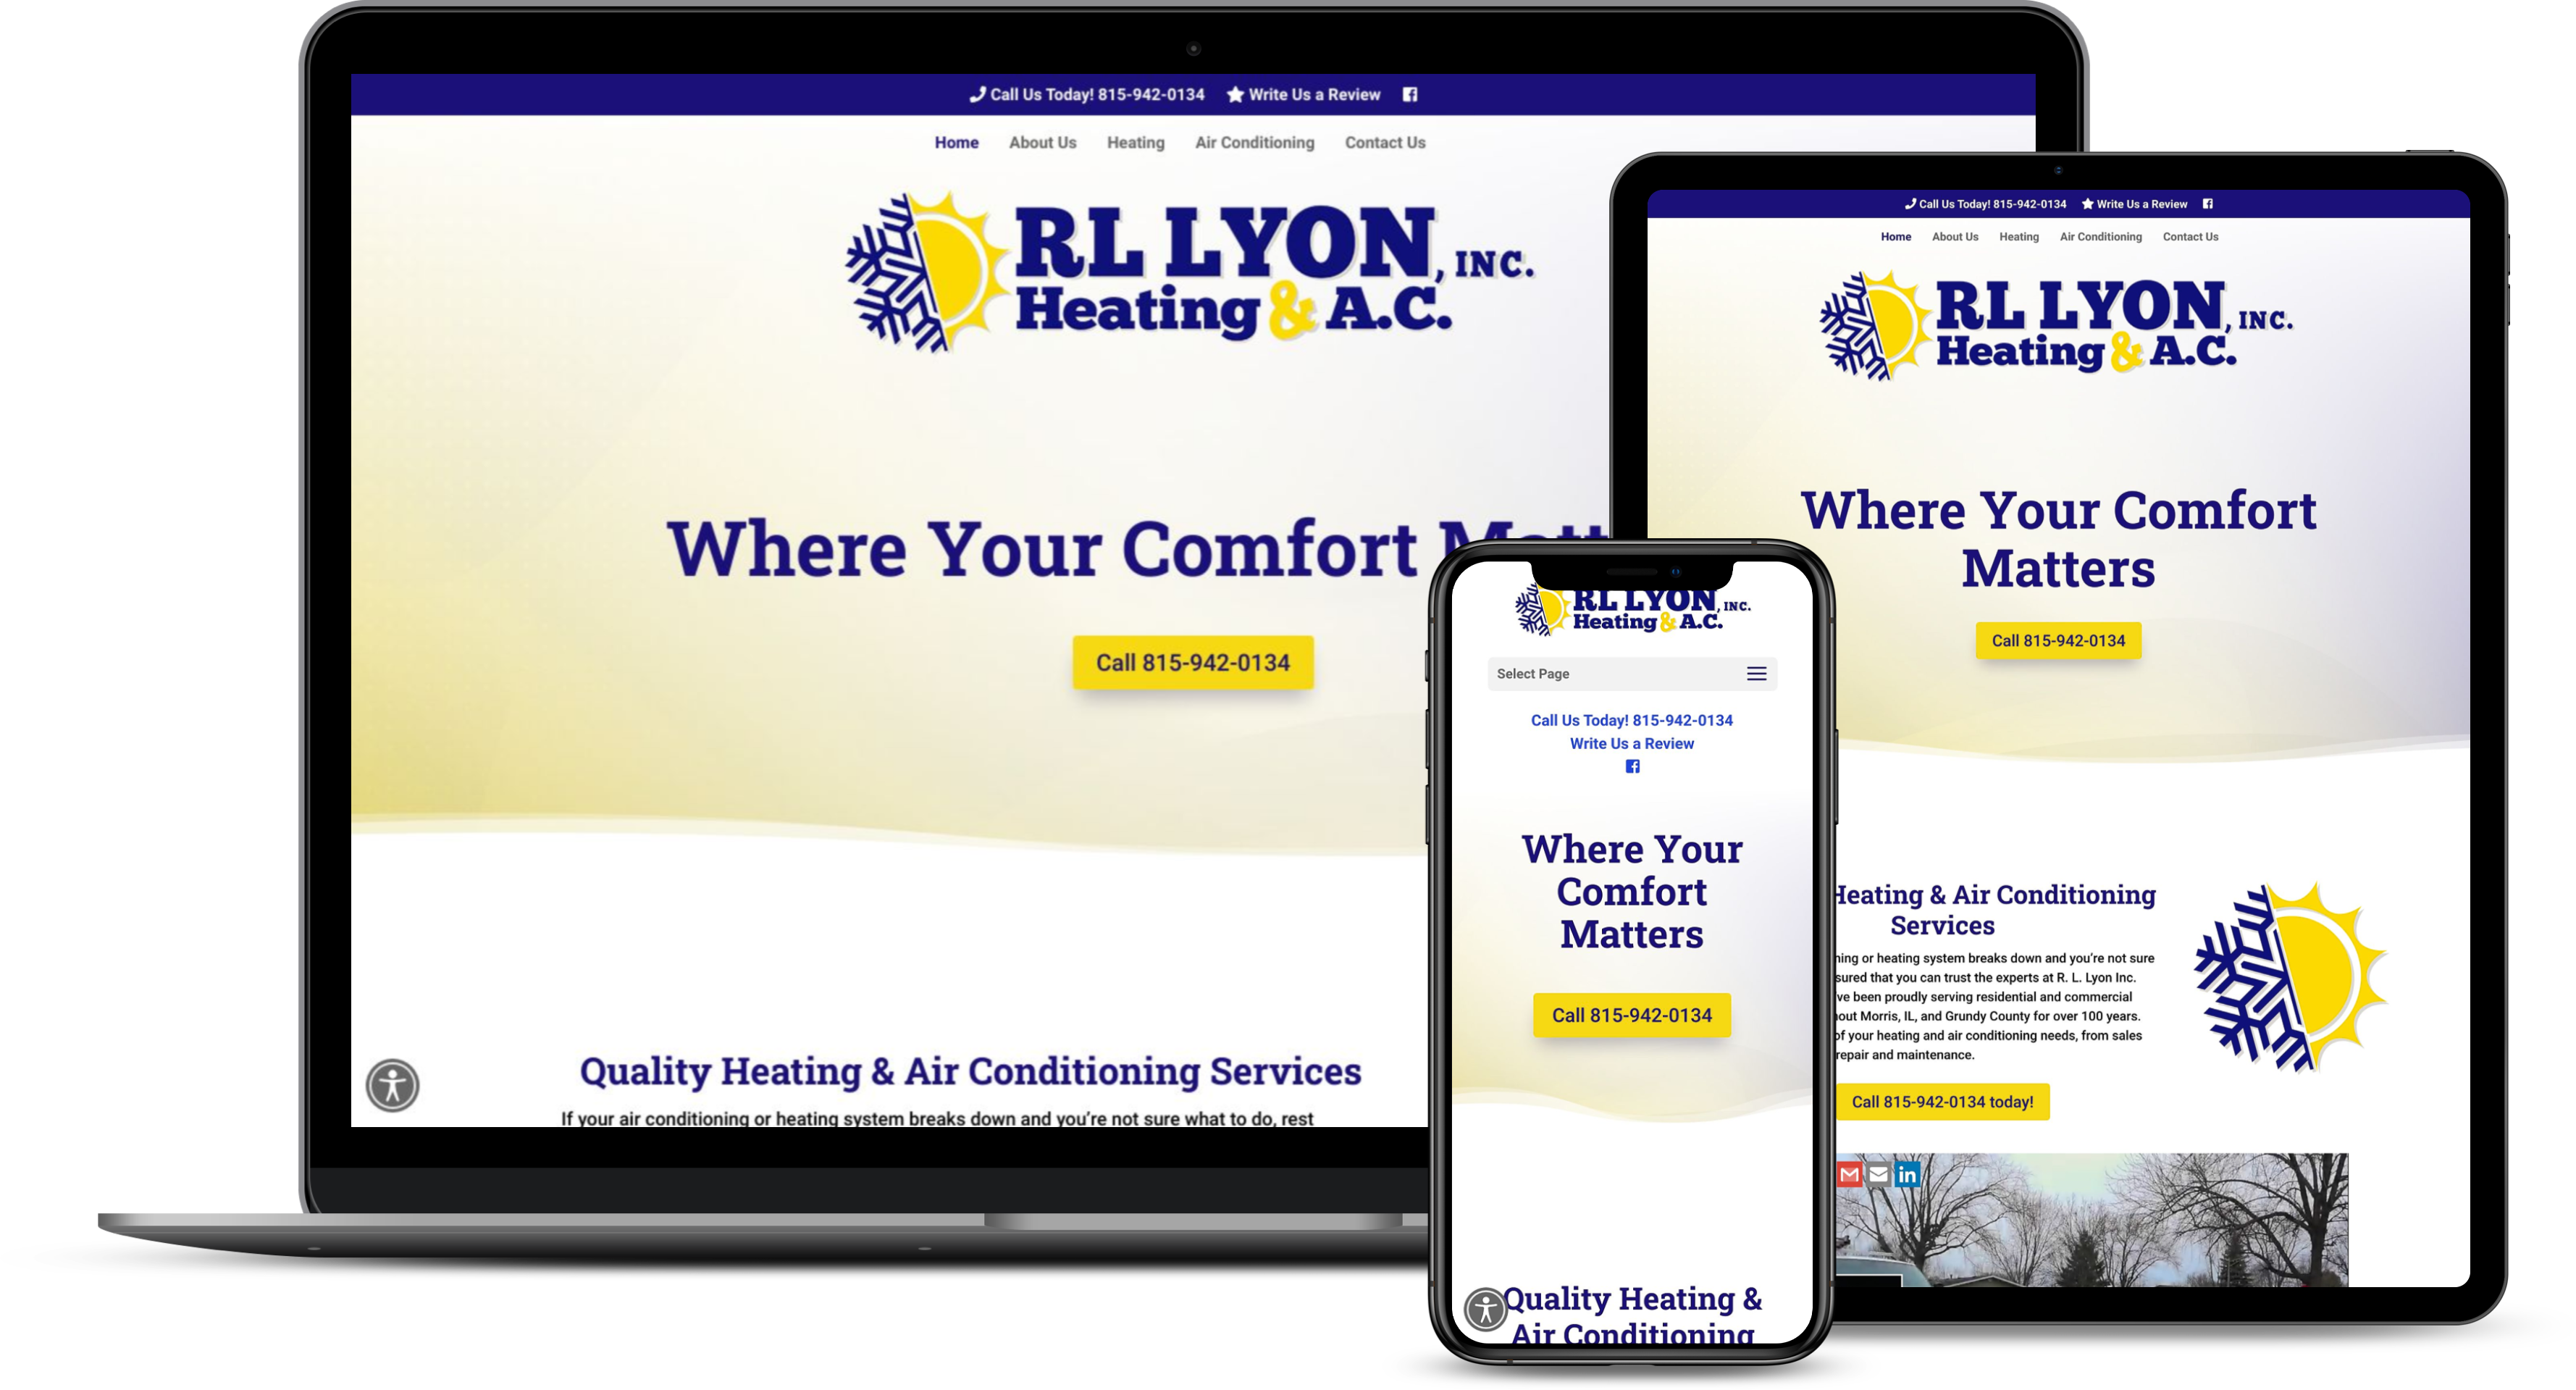 R. L. Lyon Inc. Heating & A.C.